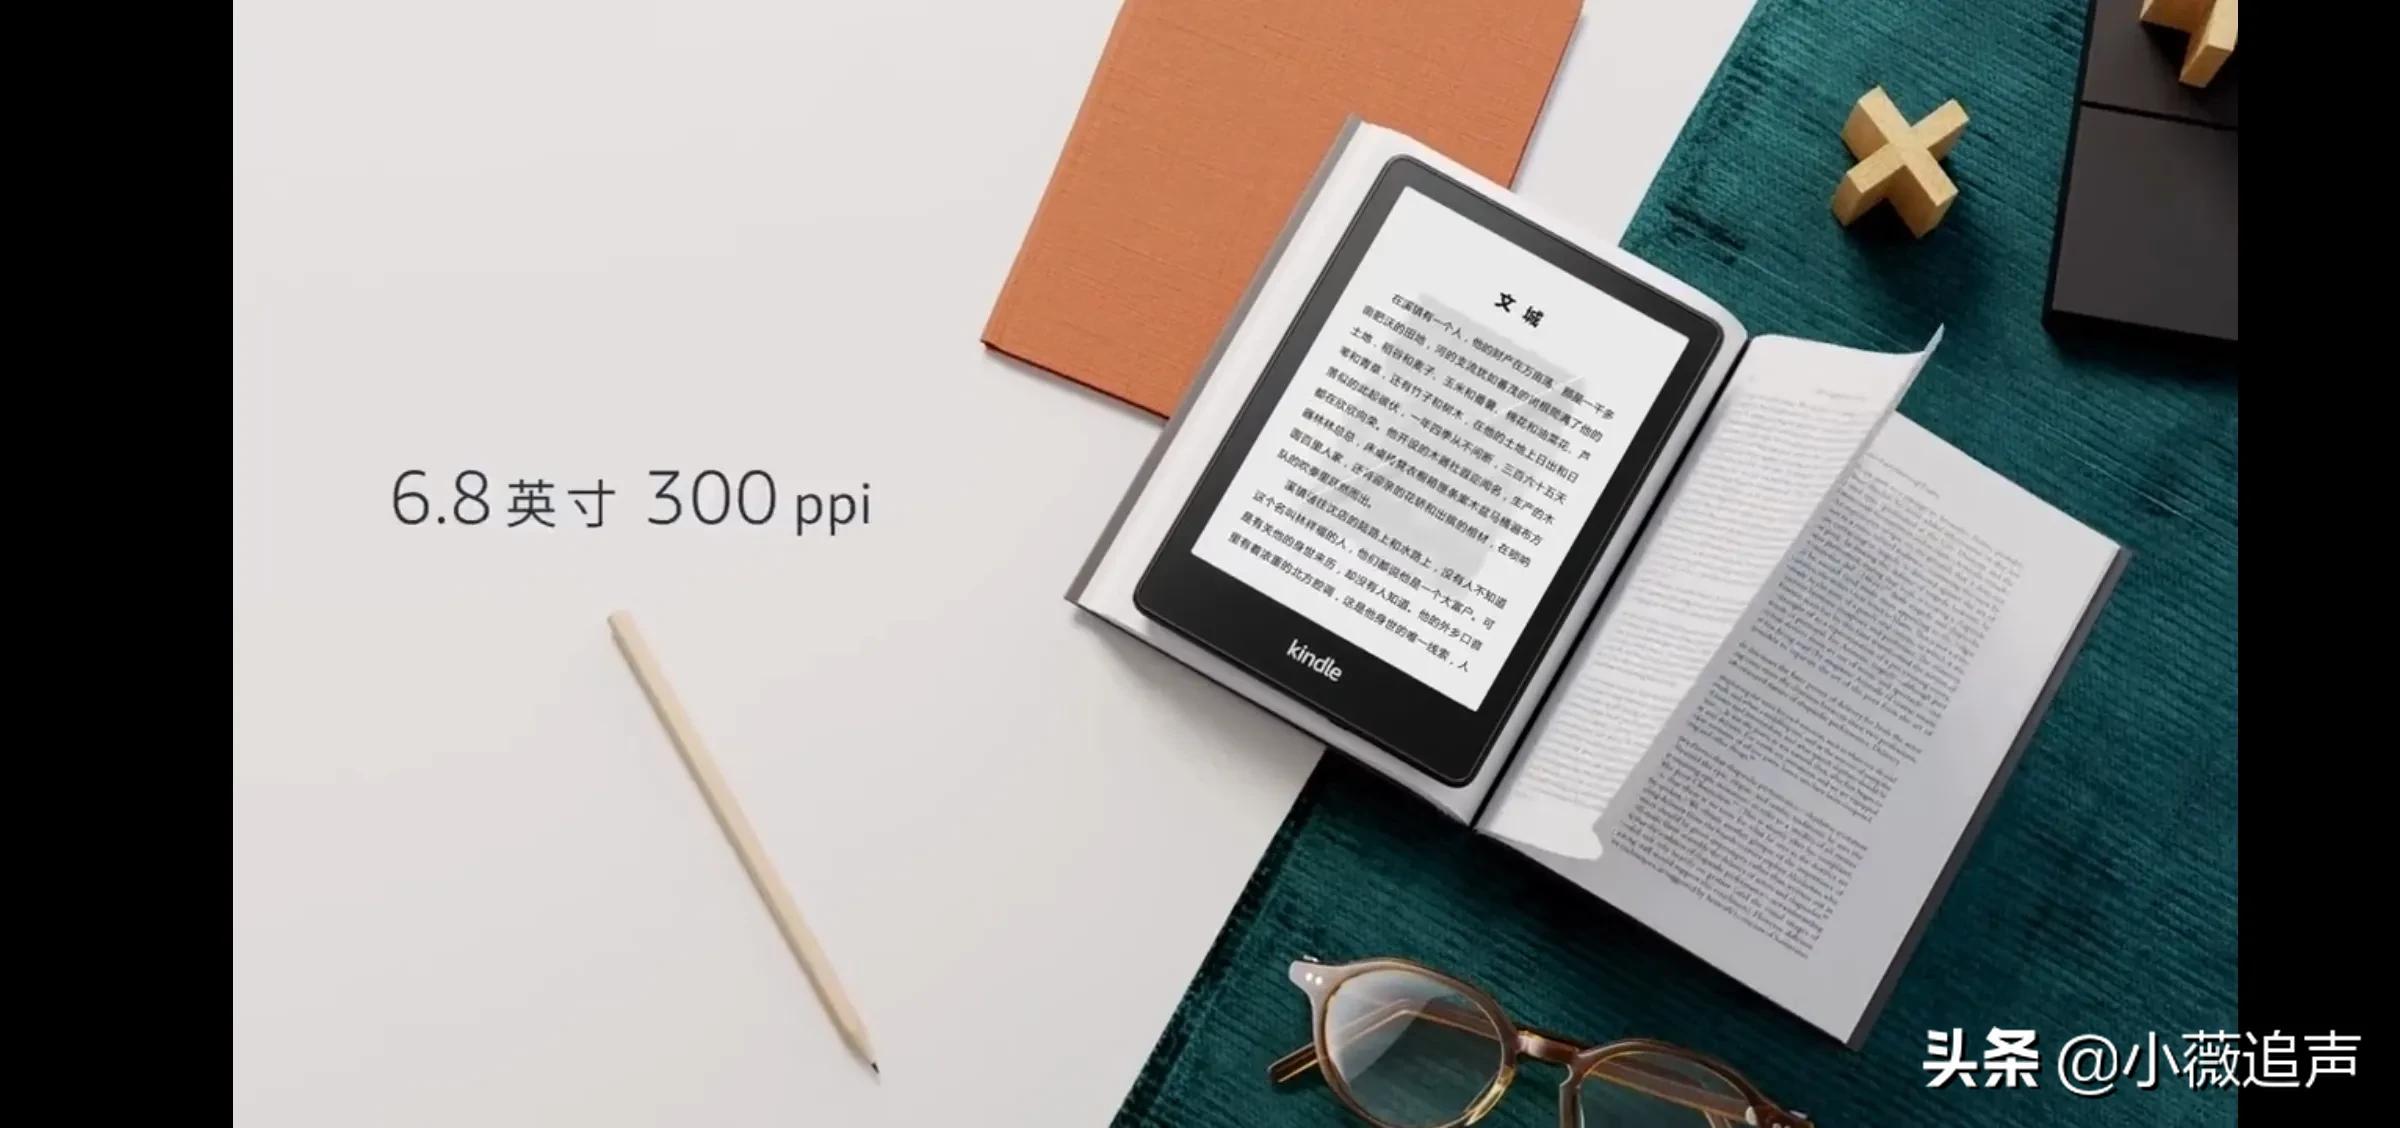 第五代 Kindle Paperwhite 发布了